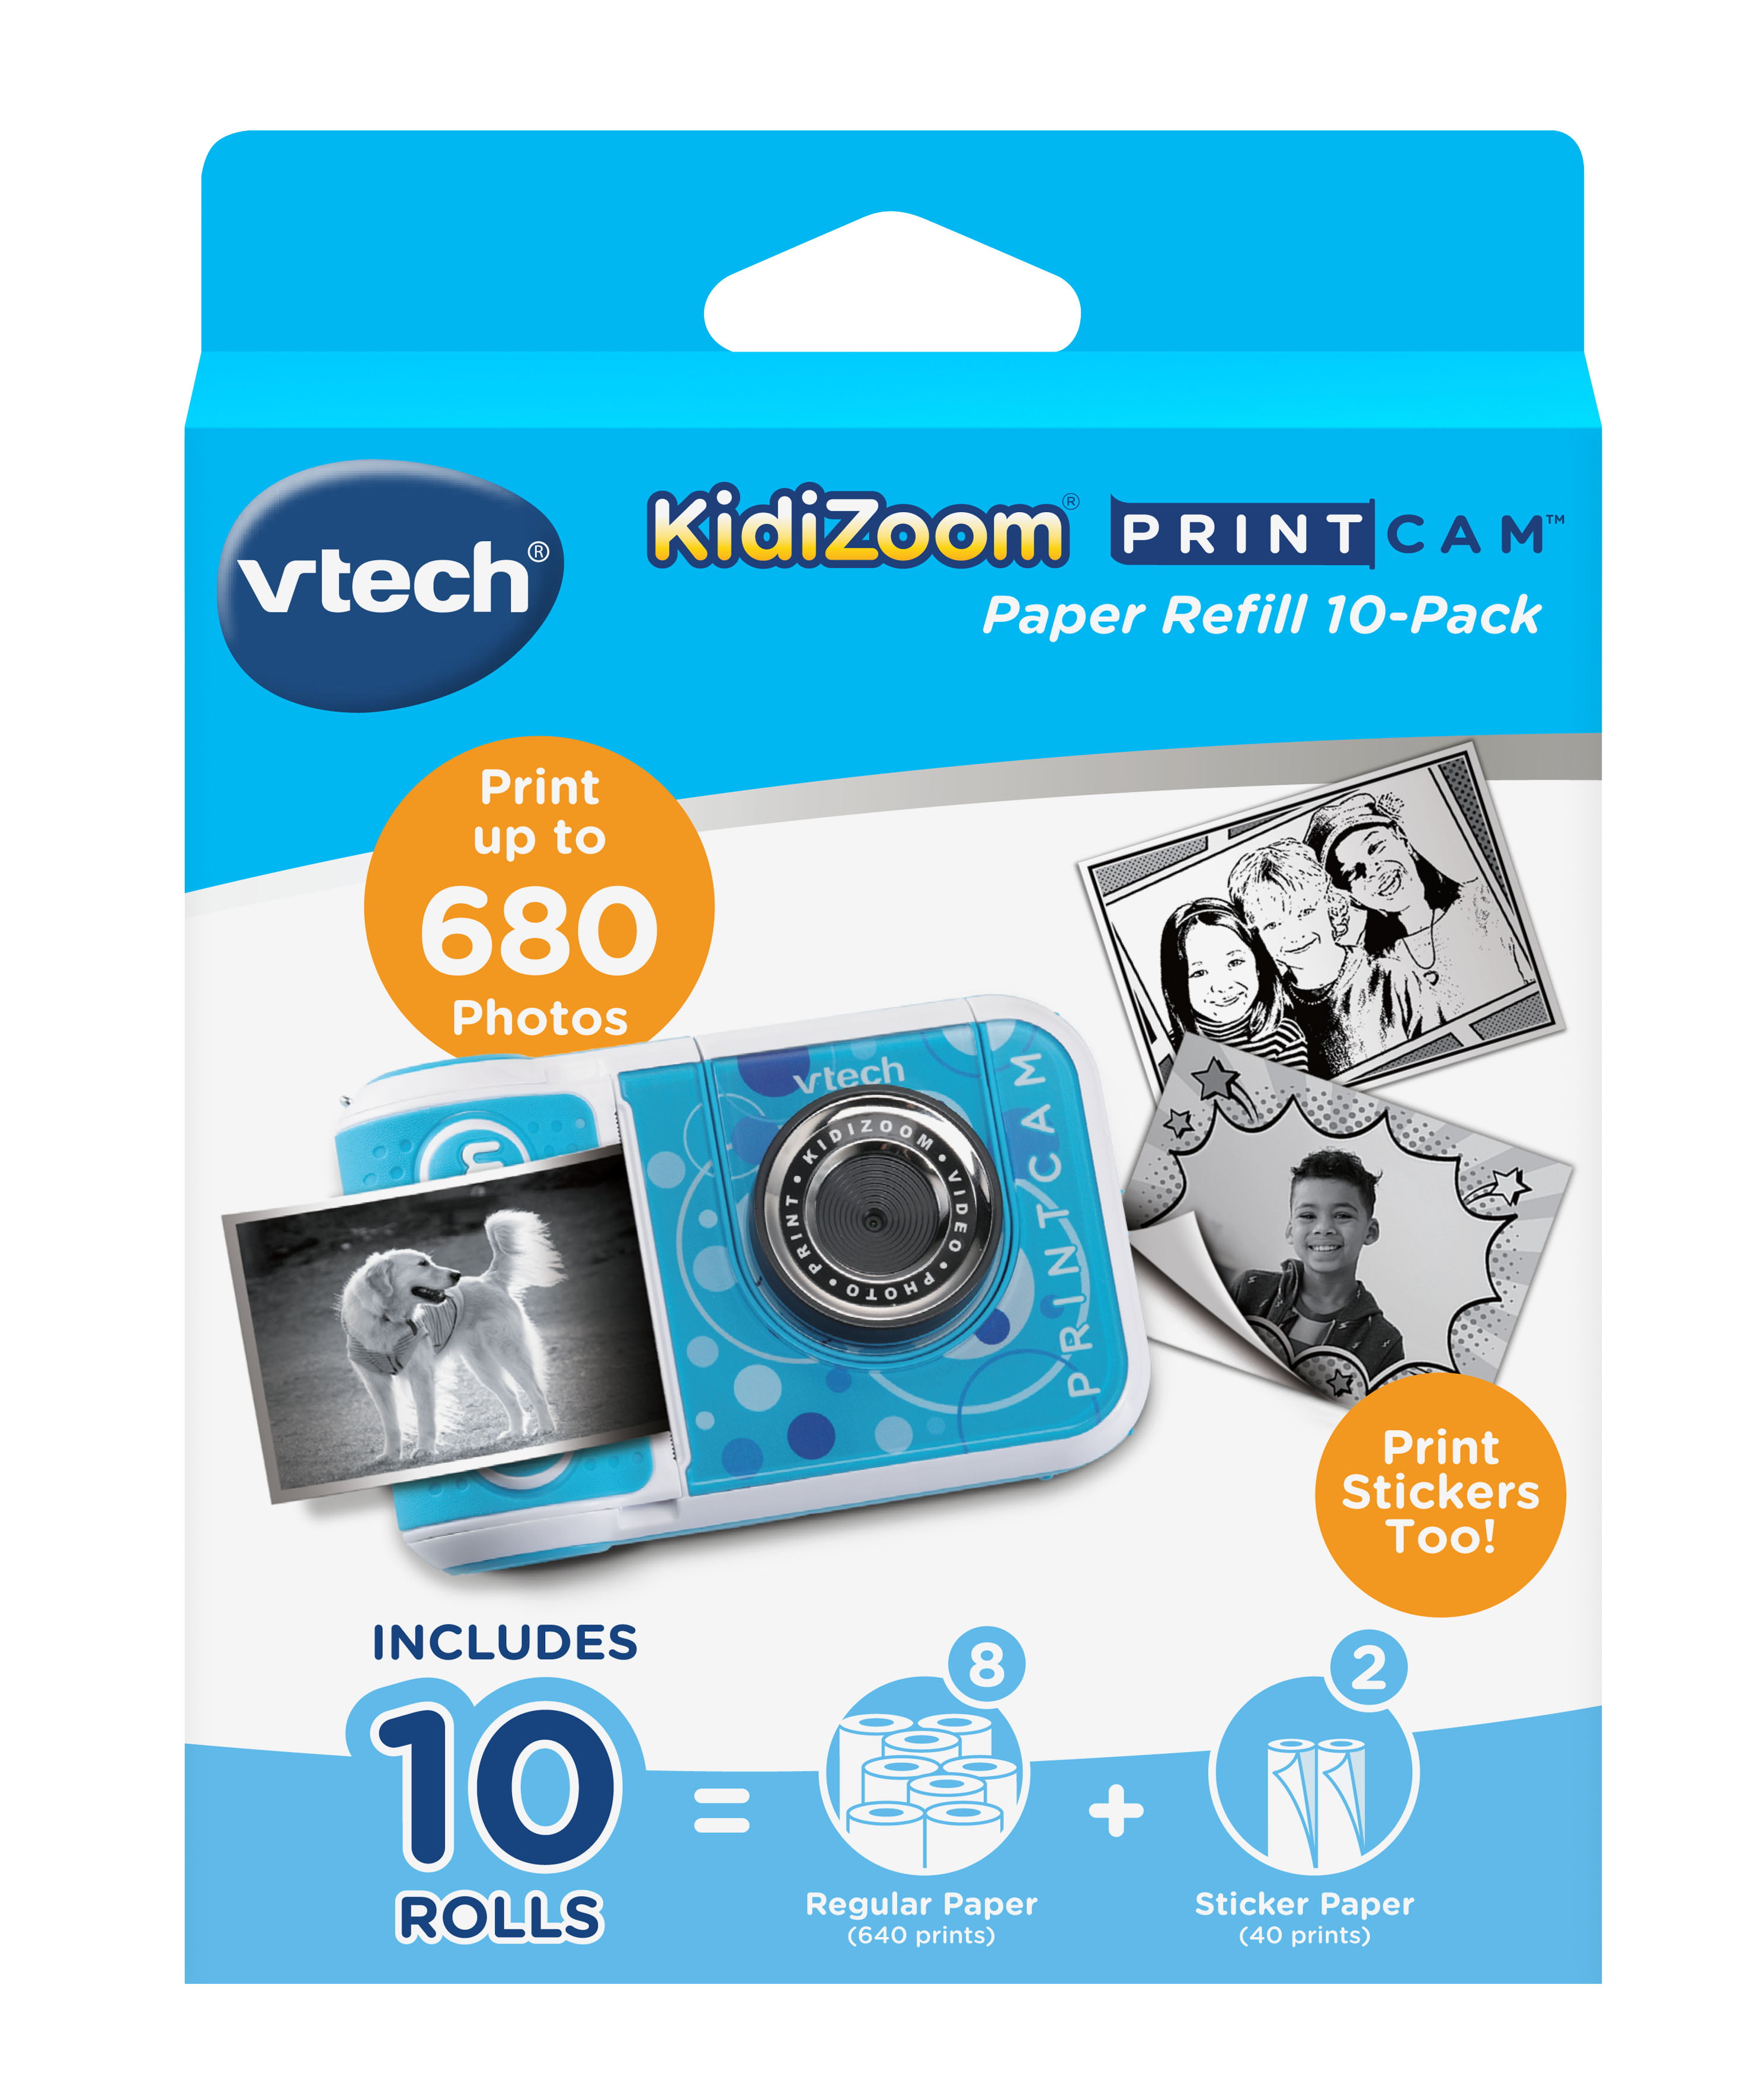 Vtech KidiZoom Printcam Paper Refill Pack 5 Rolls - 3 Regular 2 Sticker